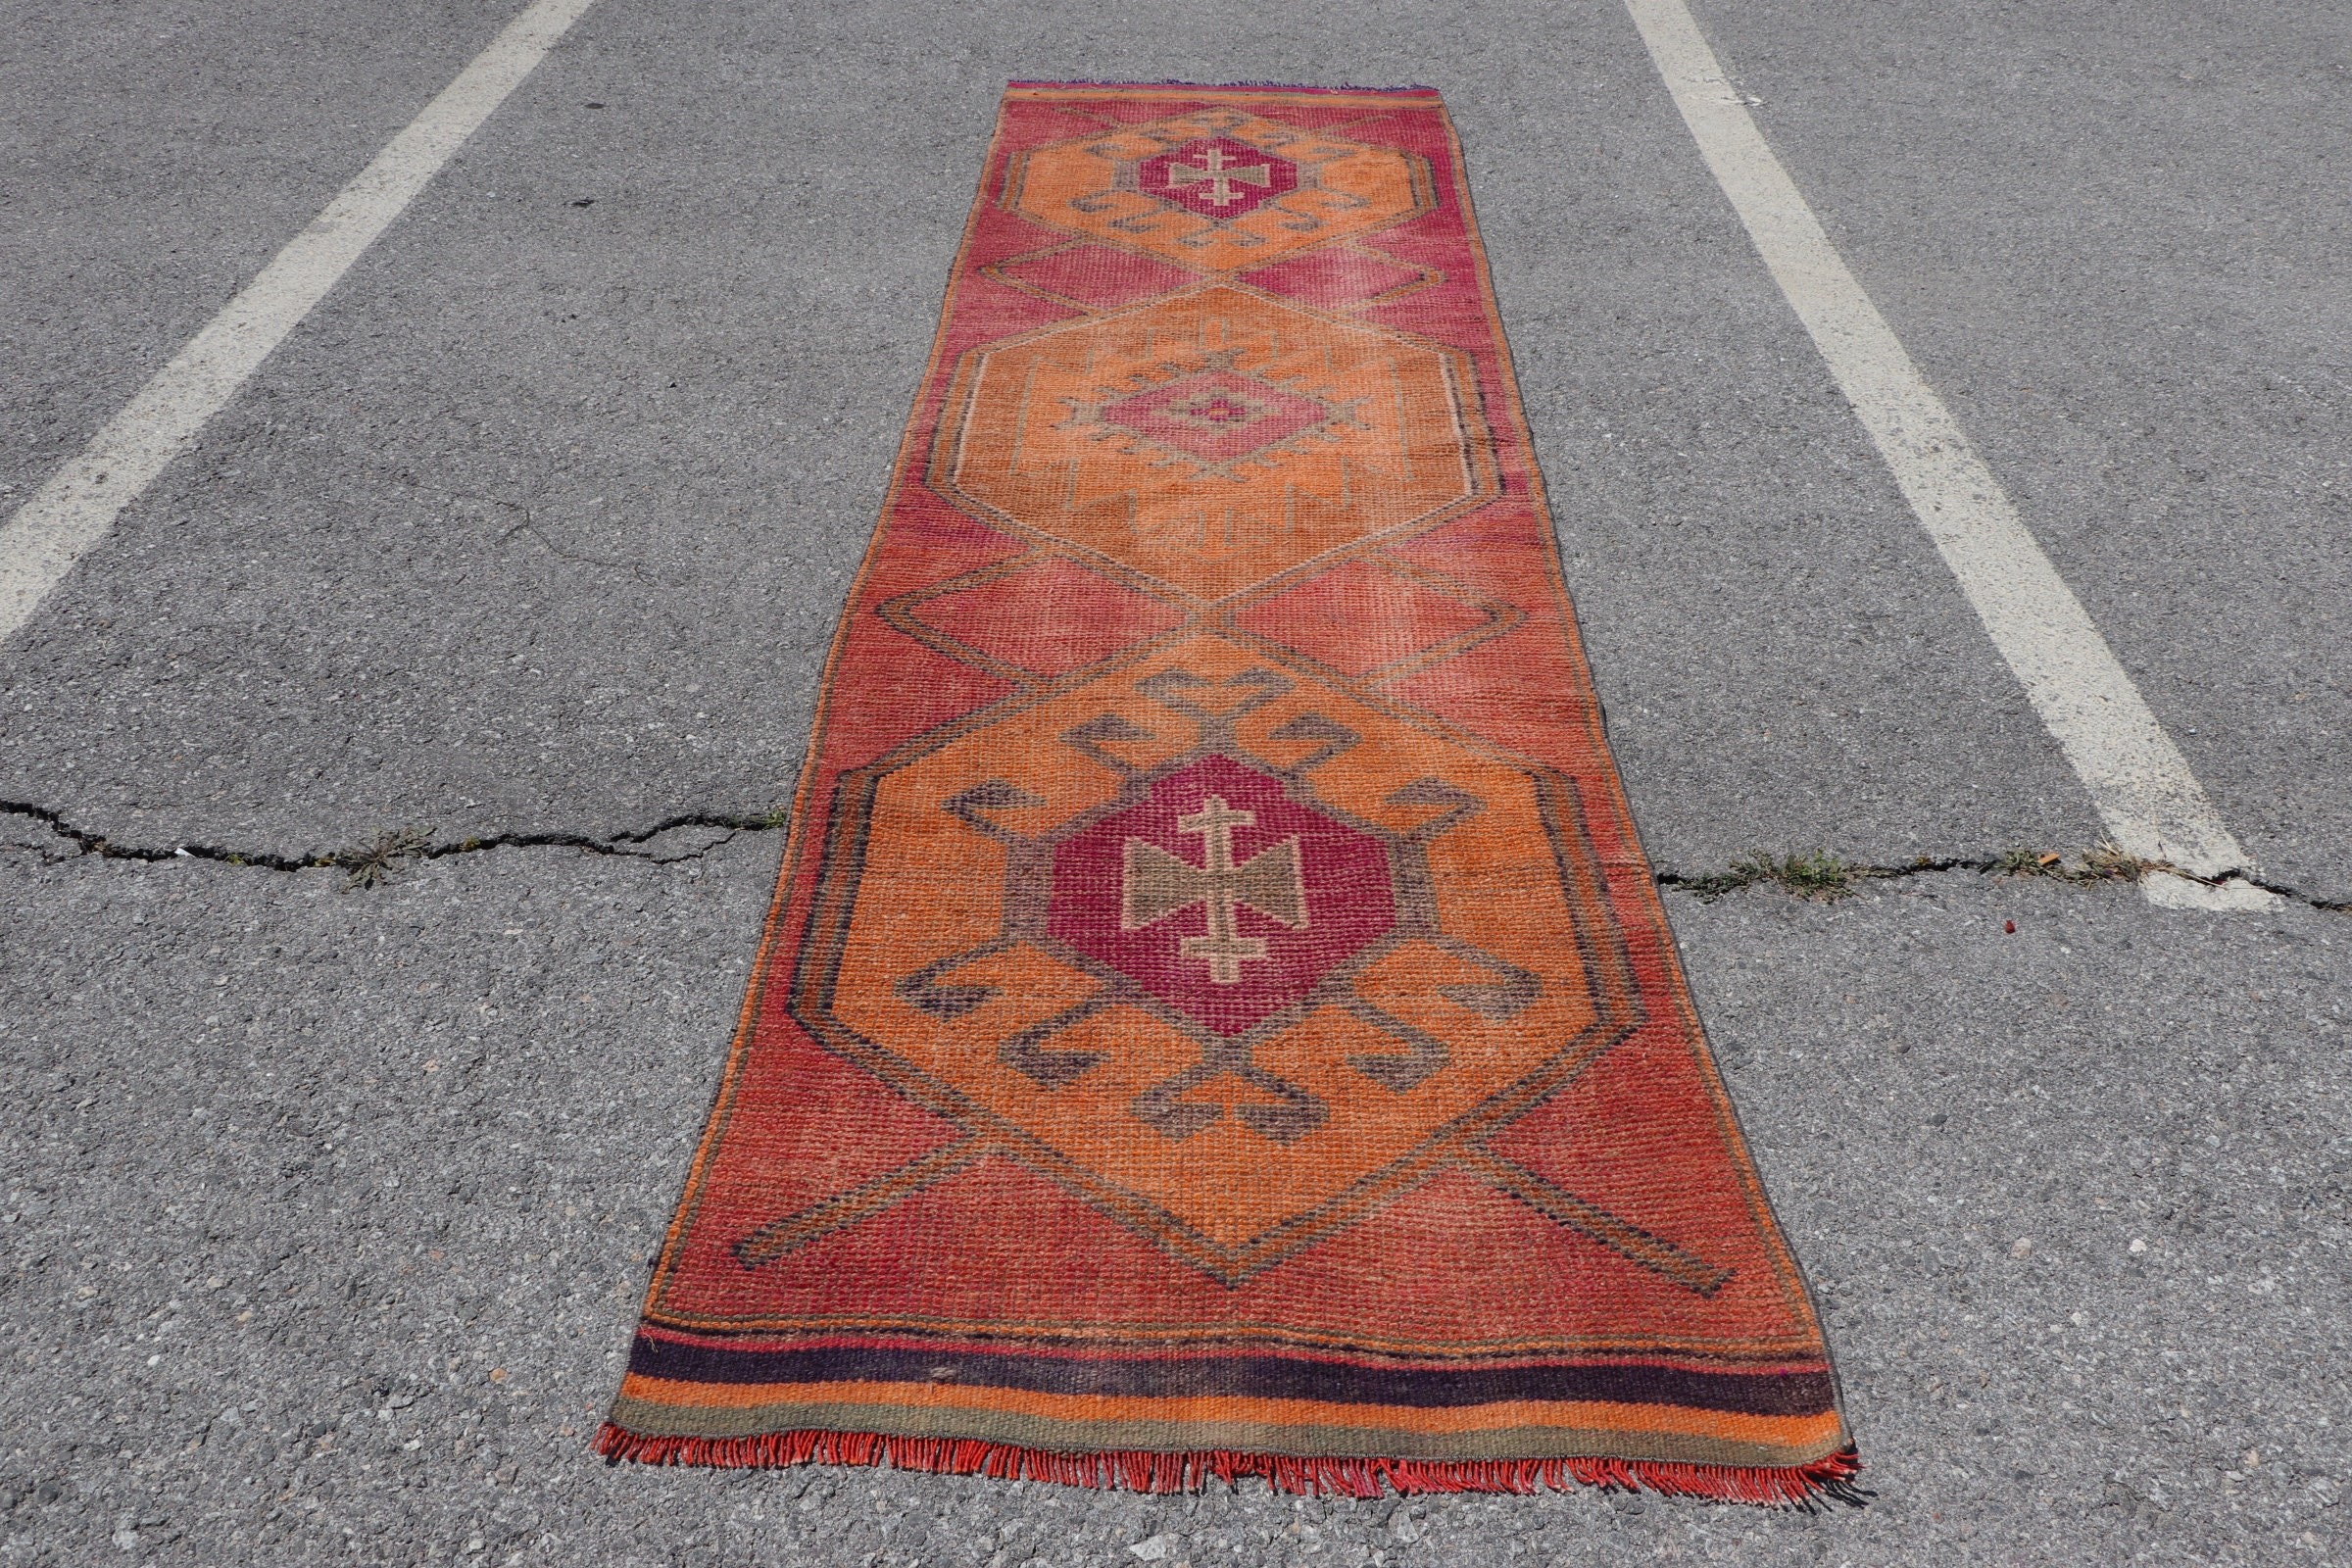 Moroccan Rug, Antique Rug, Orange Antique Rug, Rugs for Hallway, Tribal Rugs, Corridor Rug, 3x10.5 ft Runner Rug, Turkish Rug, Vintage Rugs